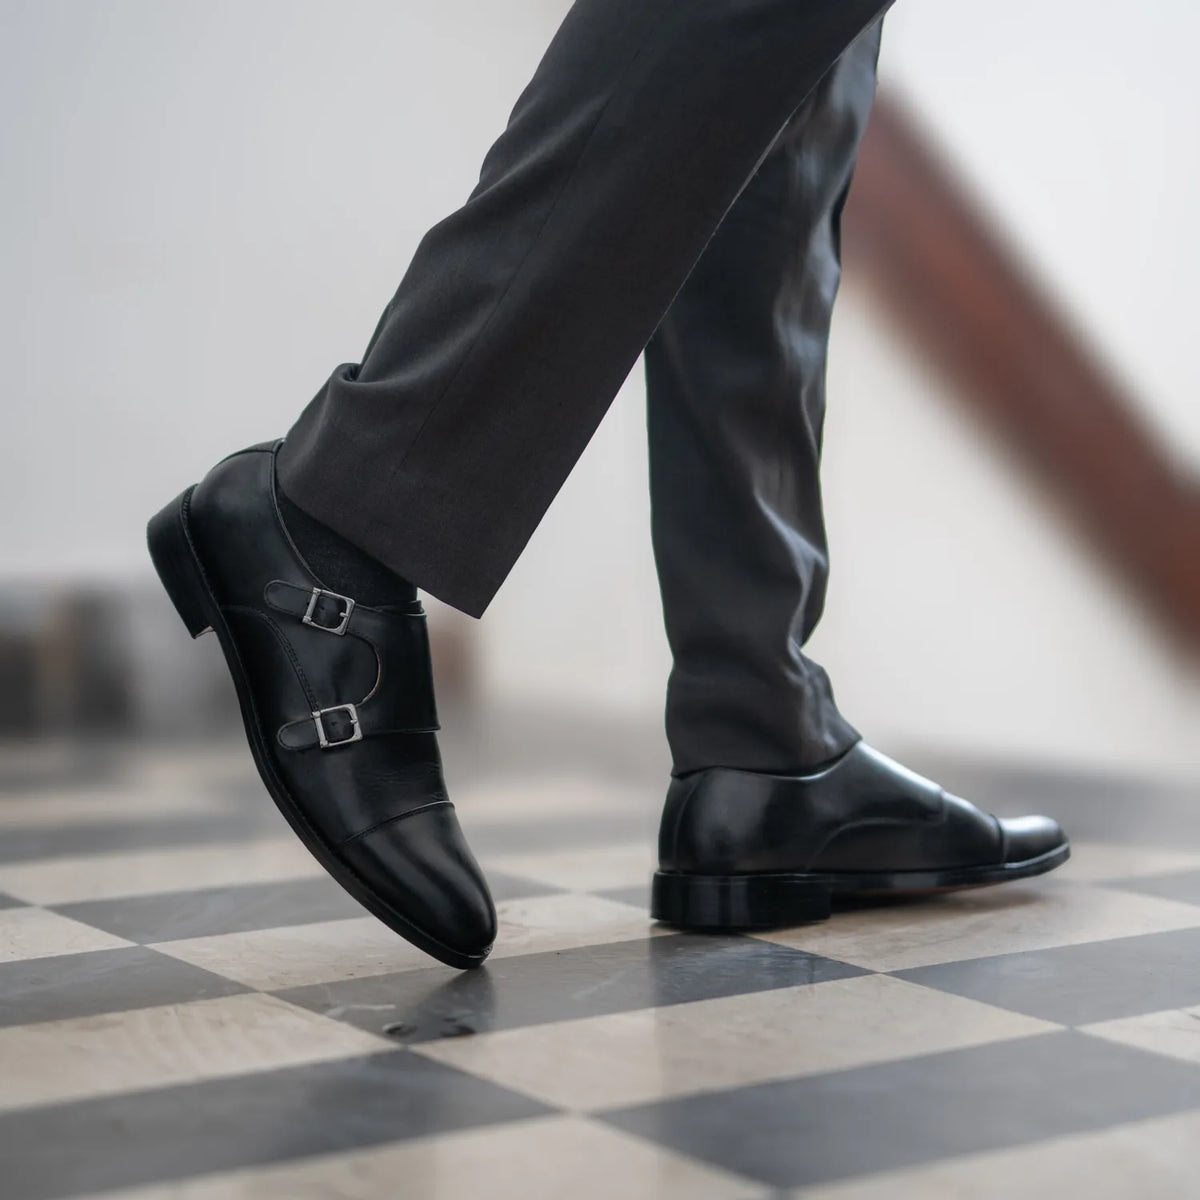 Boston Double Monk Strap Black Leather Shoes